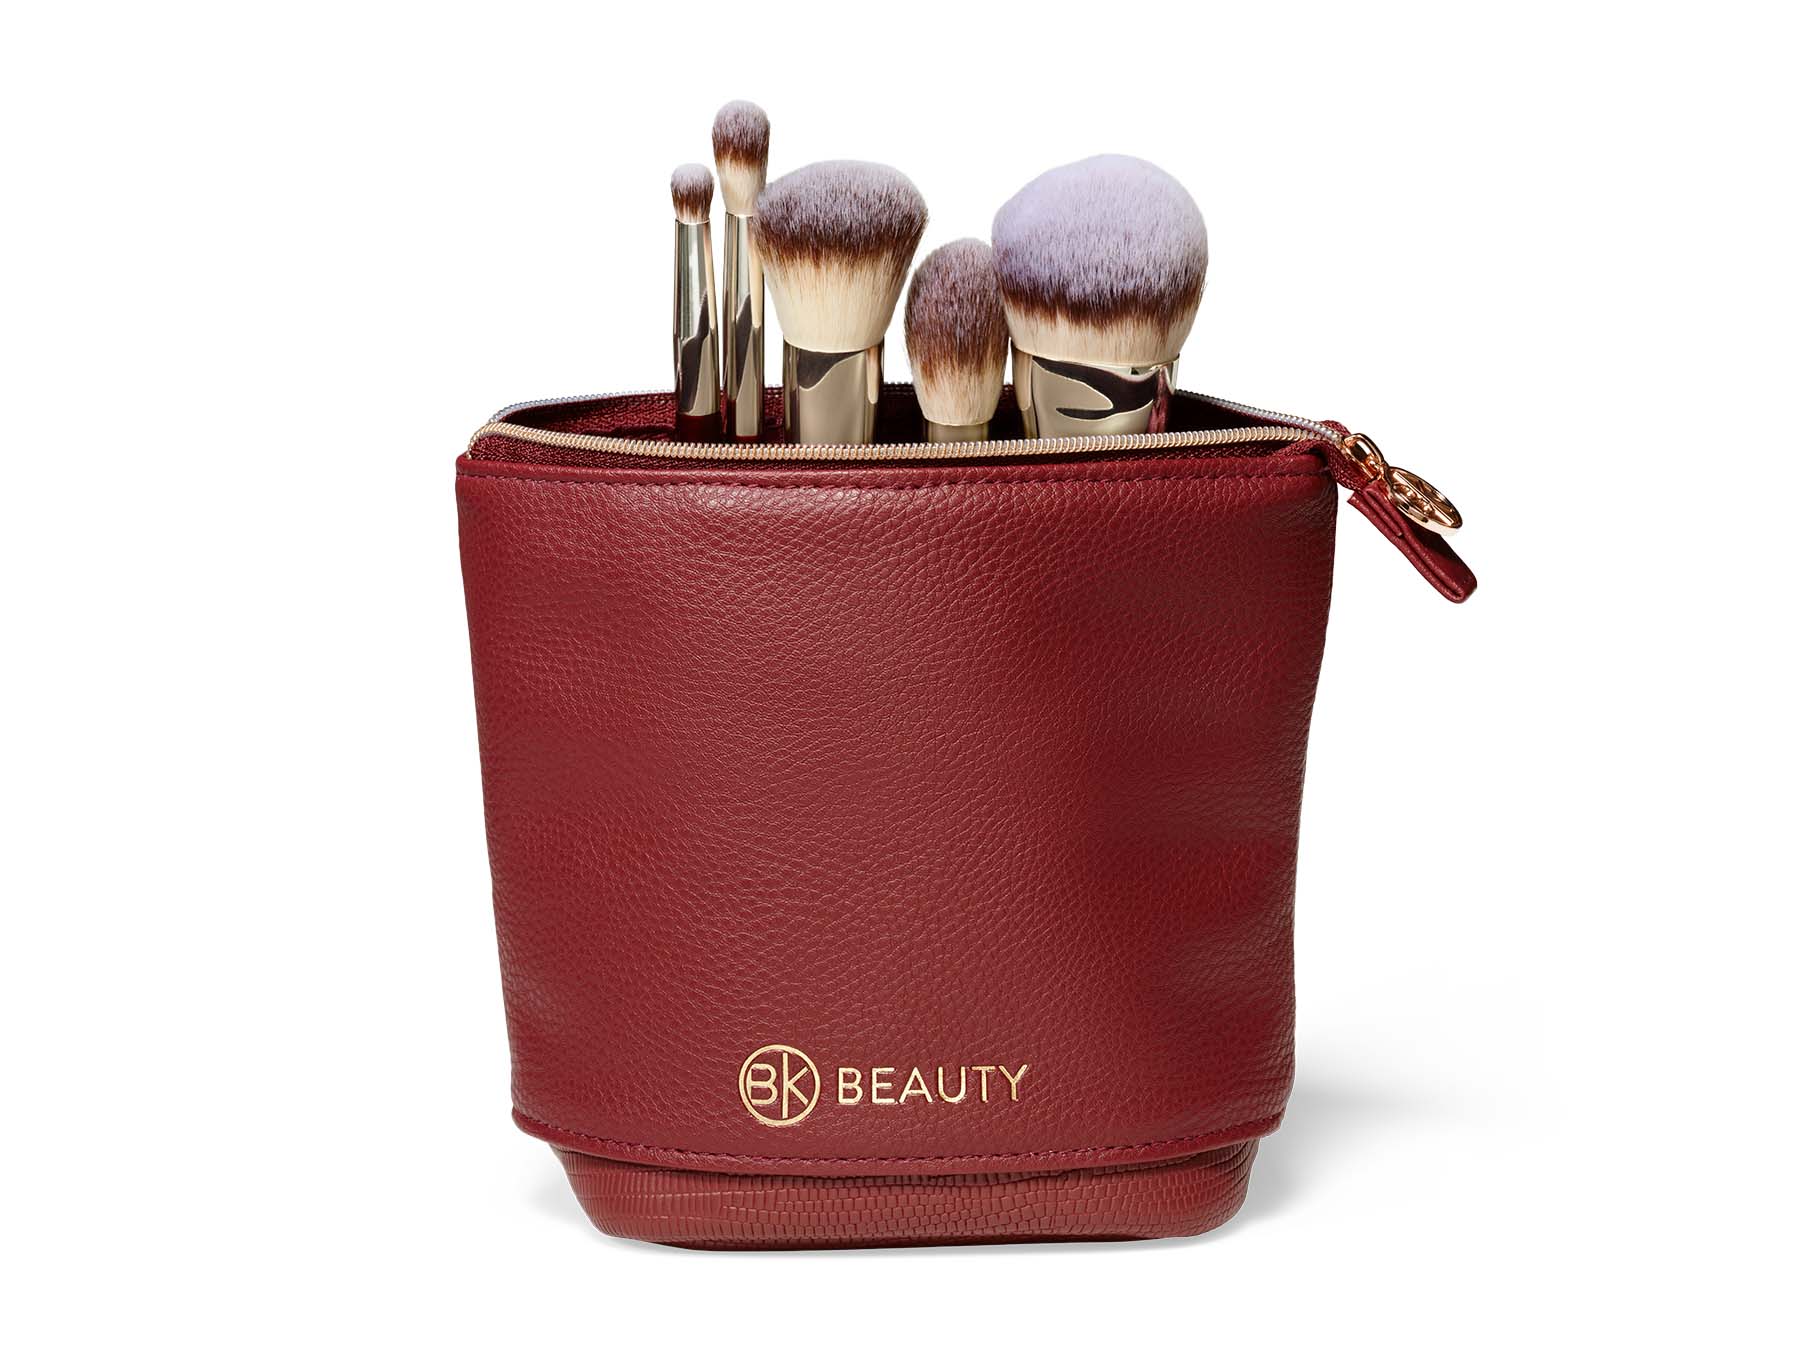 Standup Brush Holder & Travel Makeup Bag